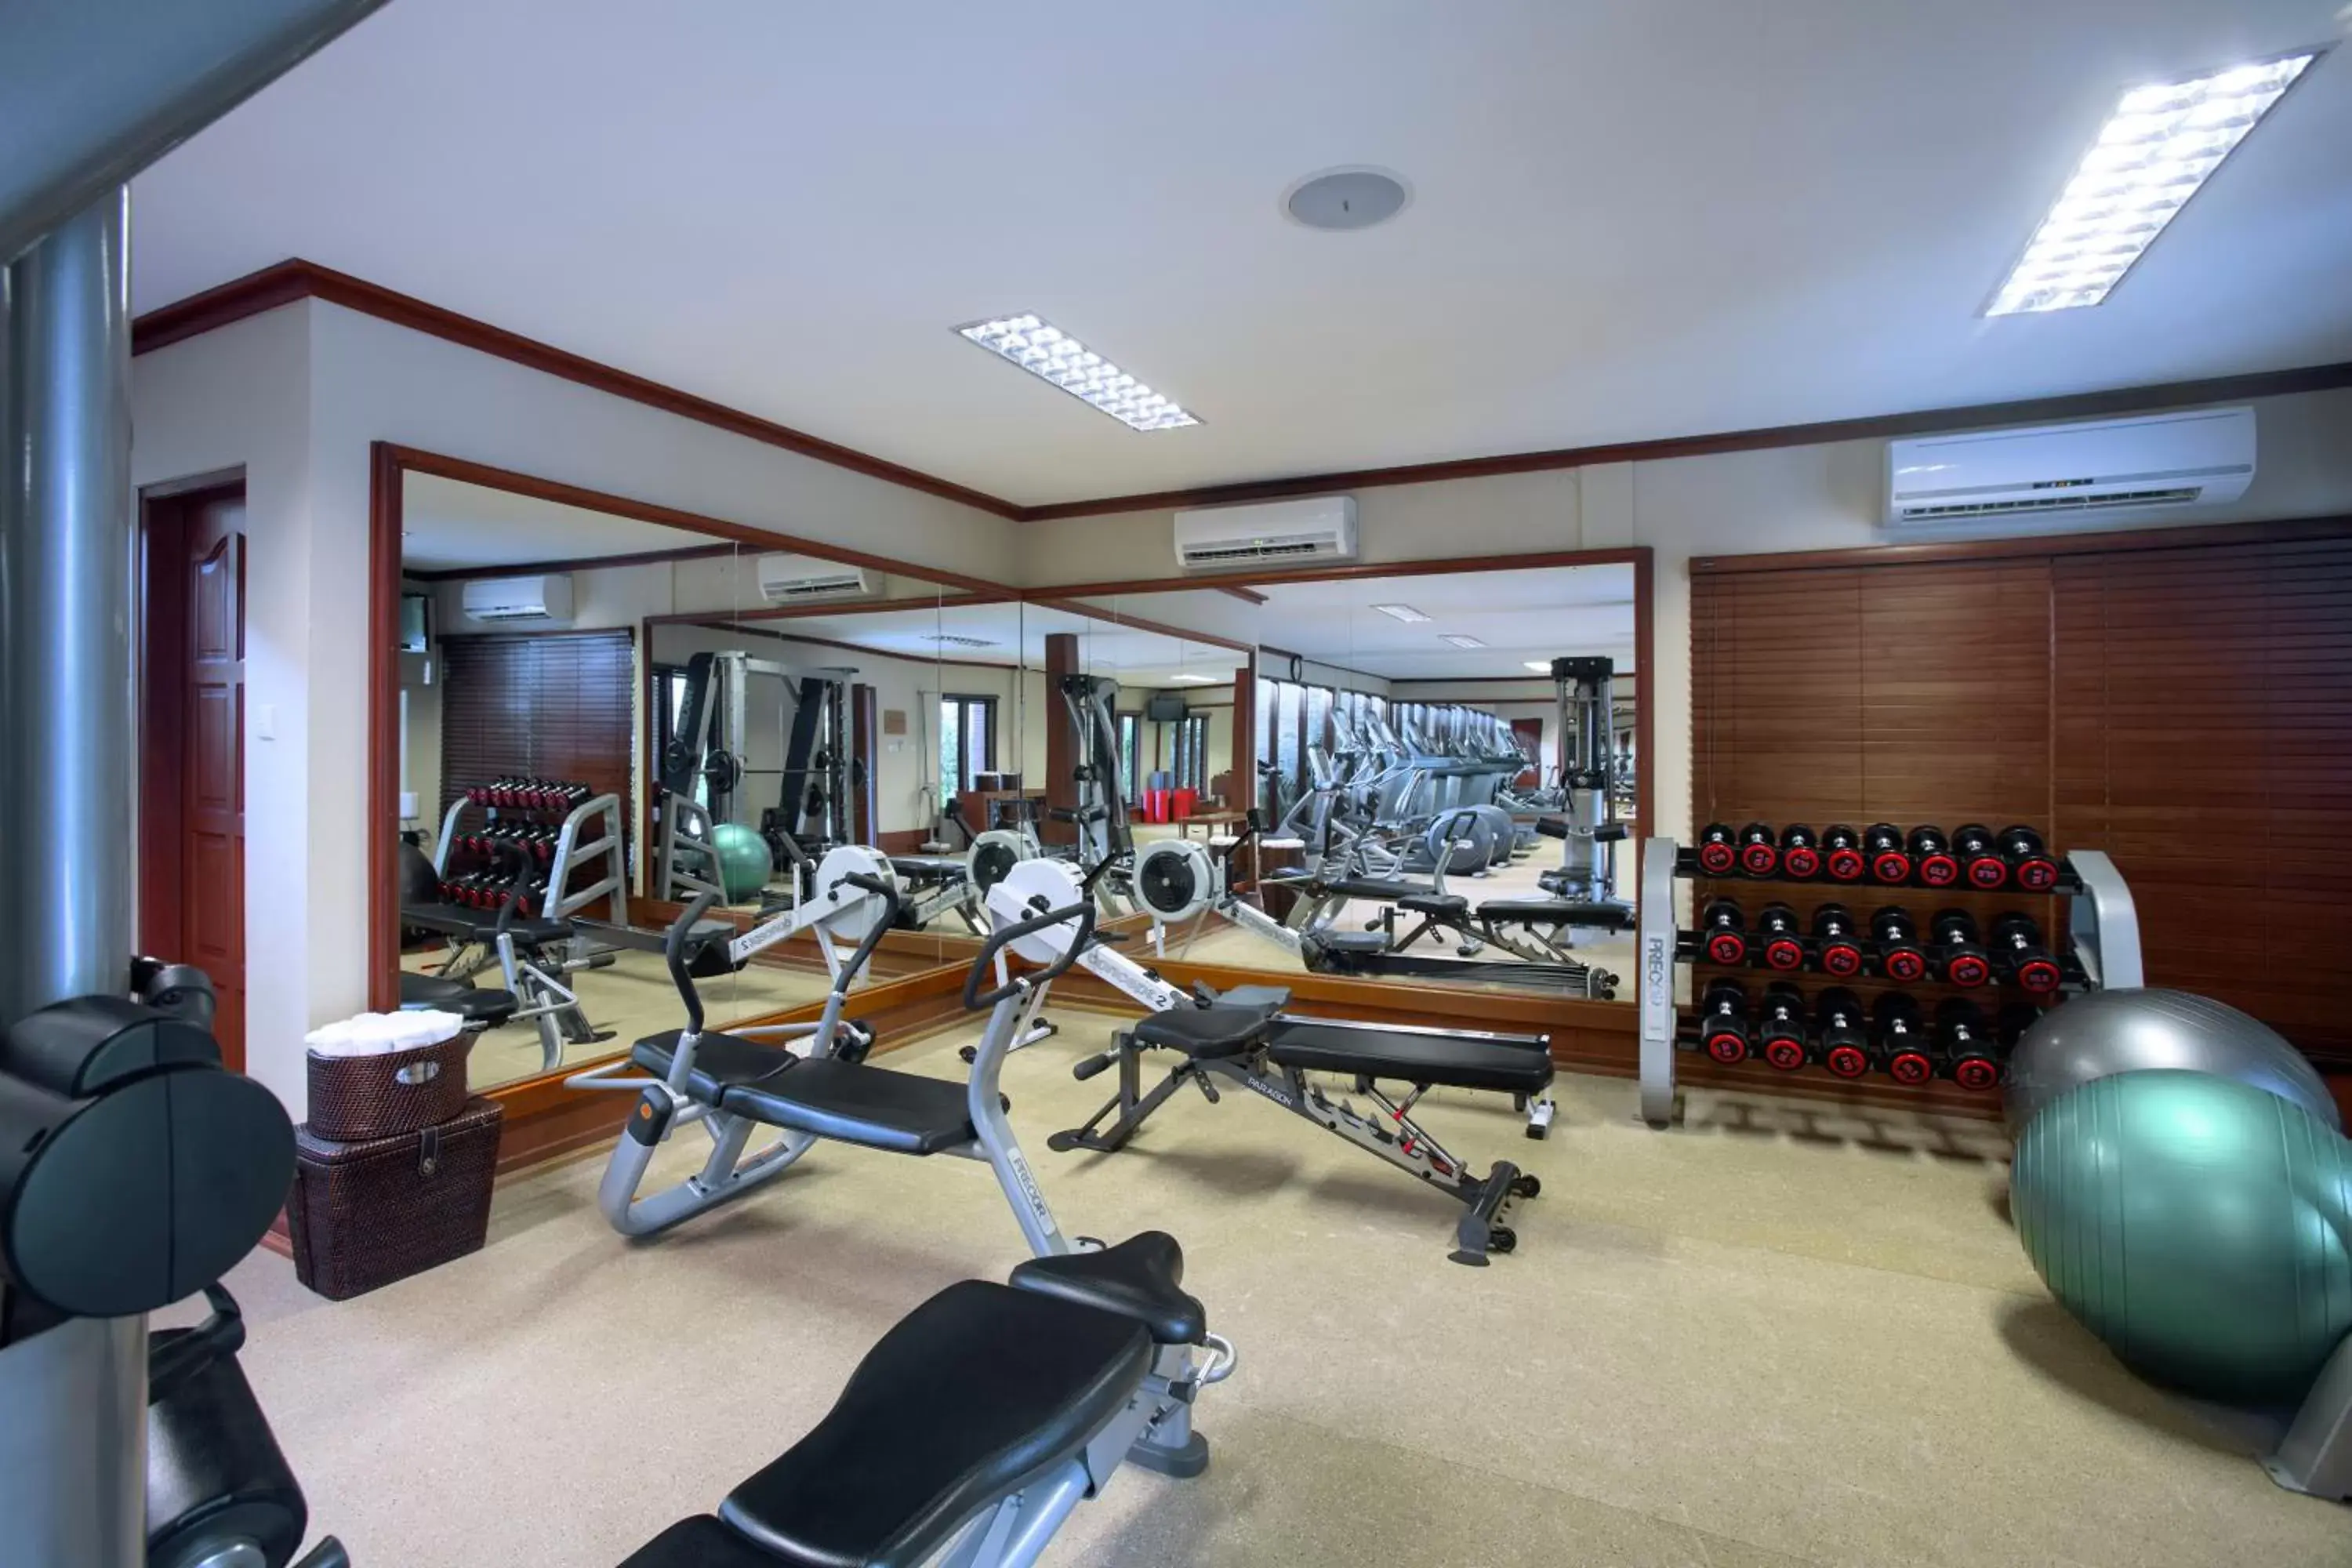 Fitness centre/facilities in Baros Maldives